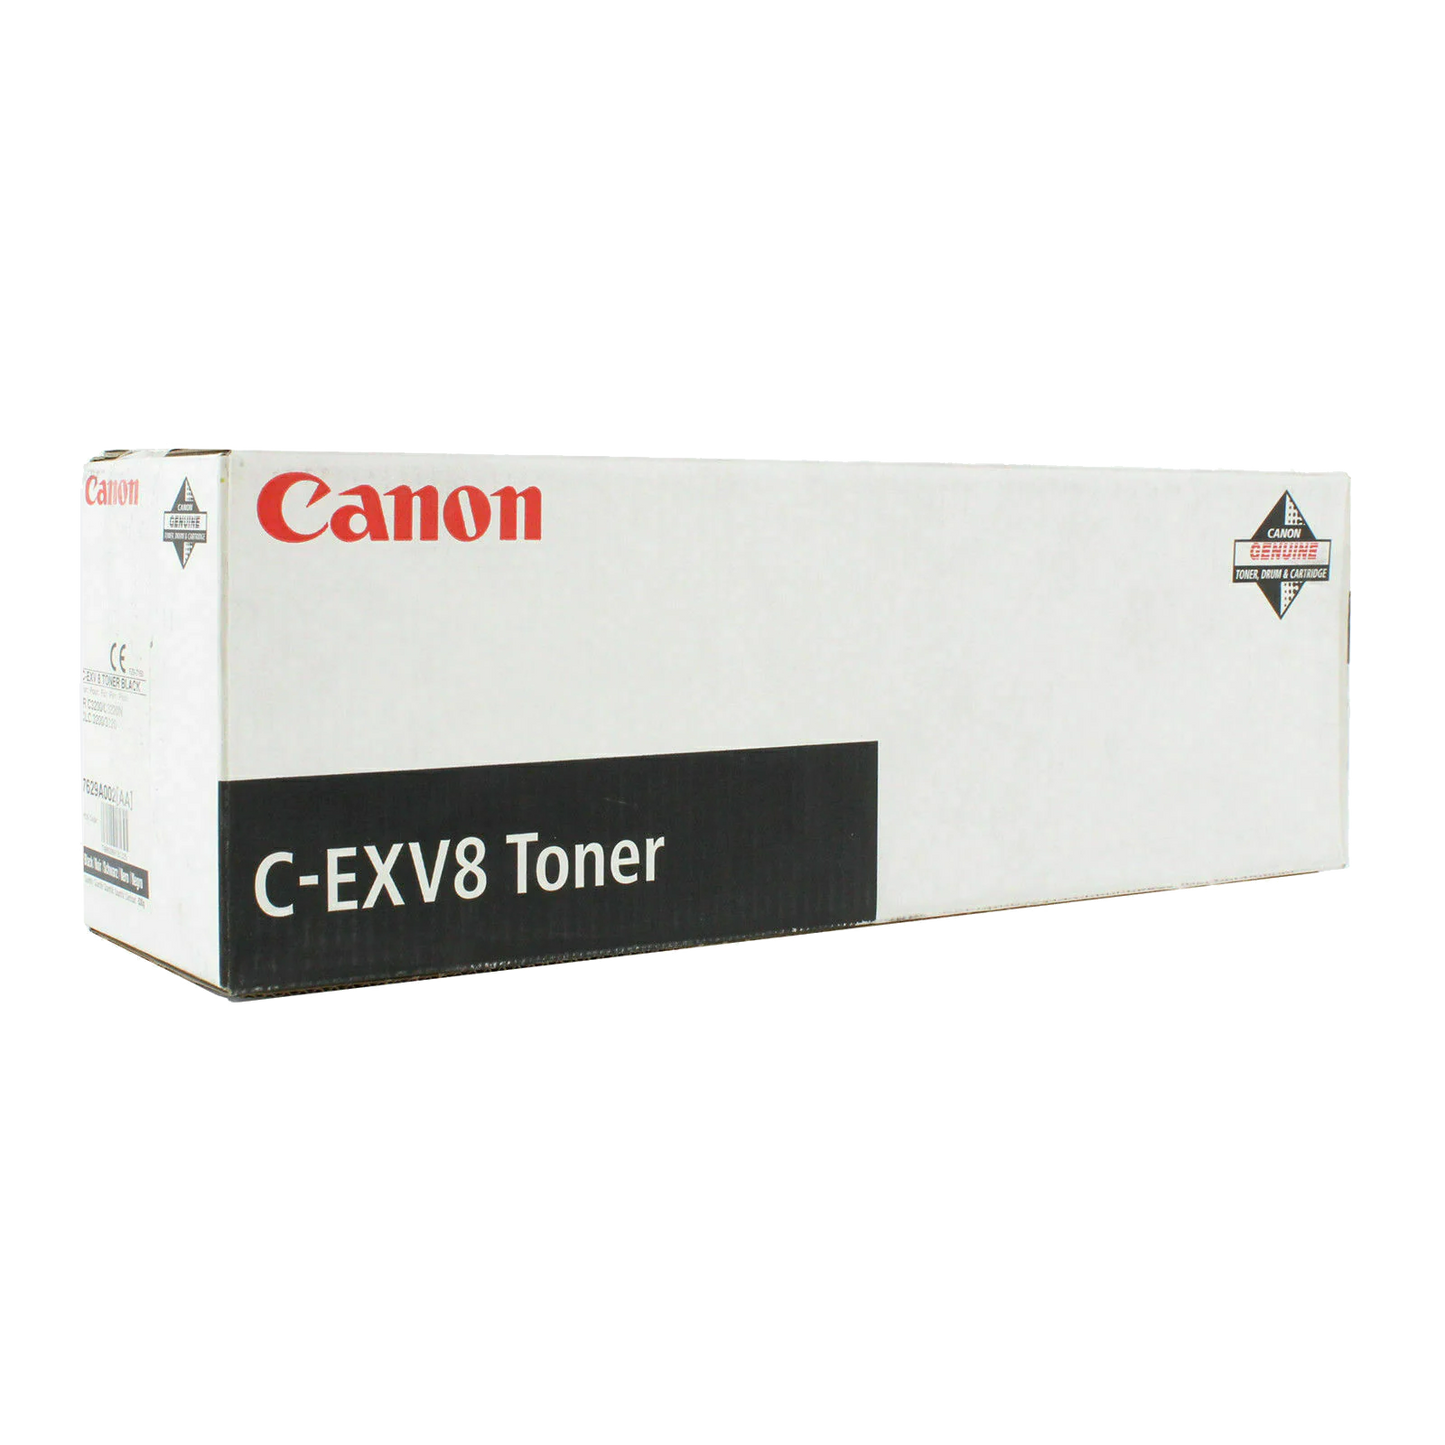 Canon C-EXV8 Toner Cartridge Black